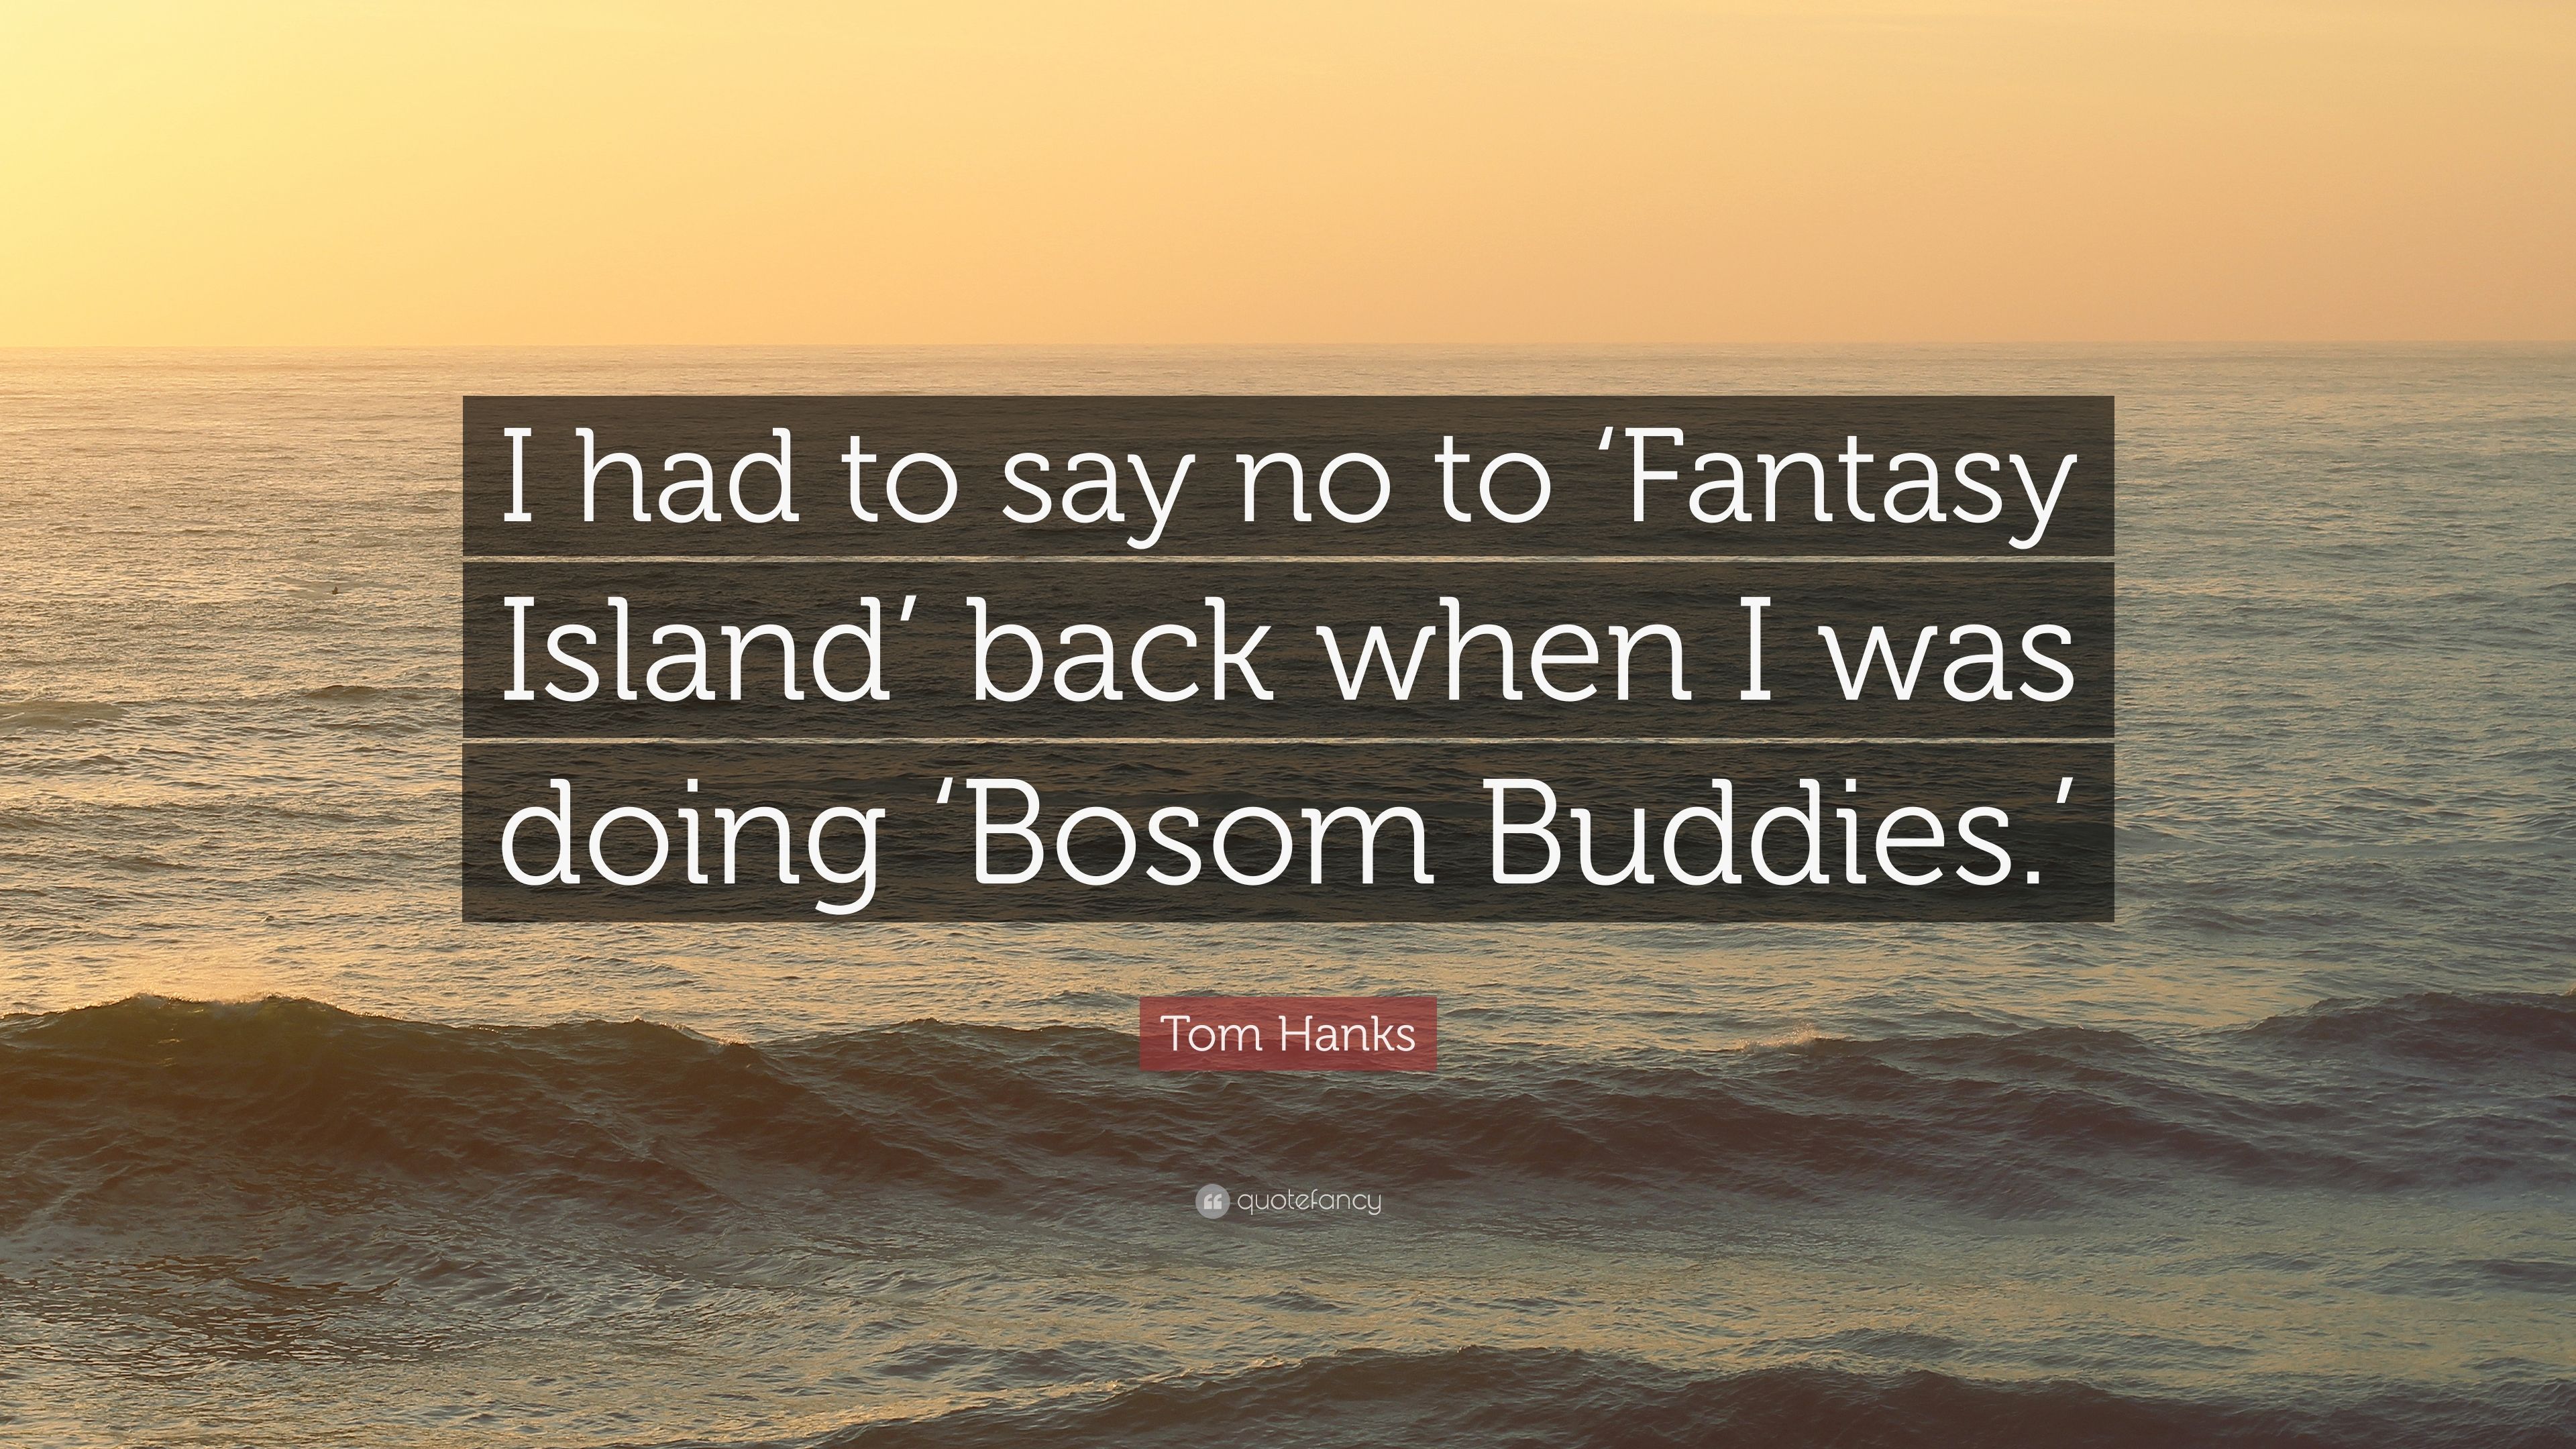 Tom Hanks Quote: “I had to say no to 'Fantasy Island' back when I